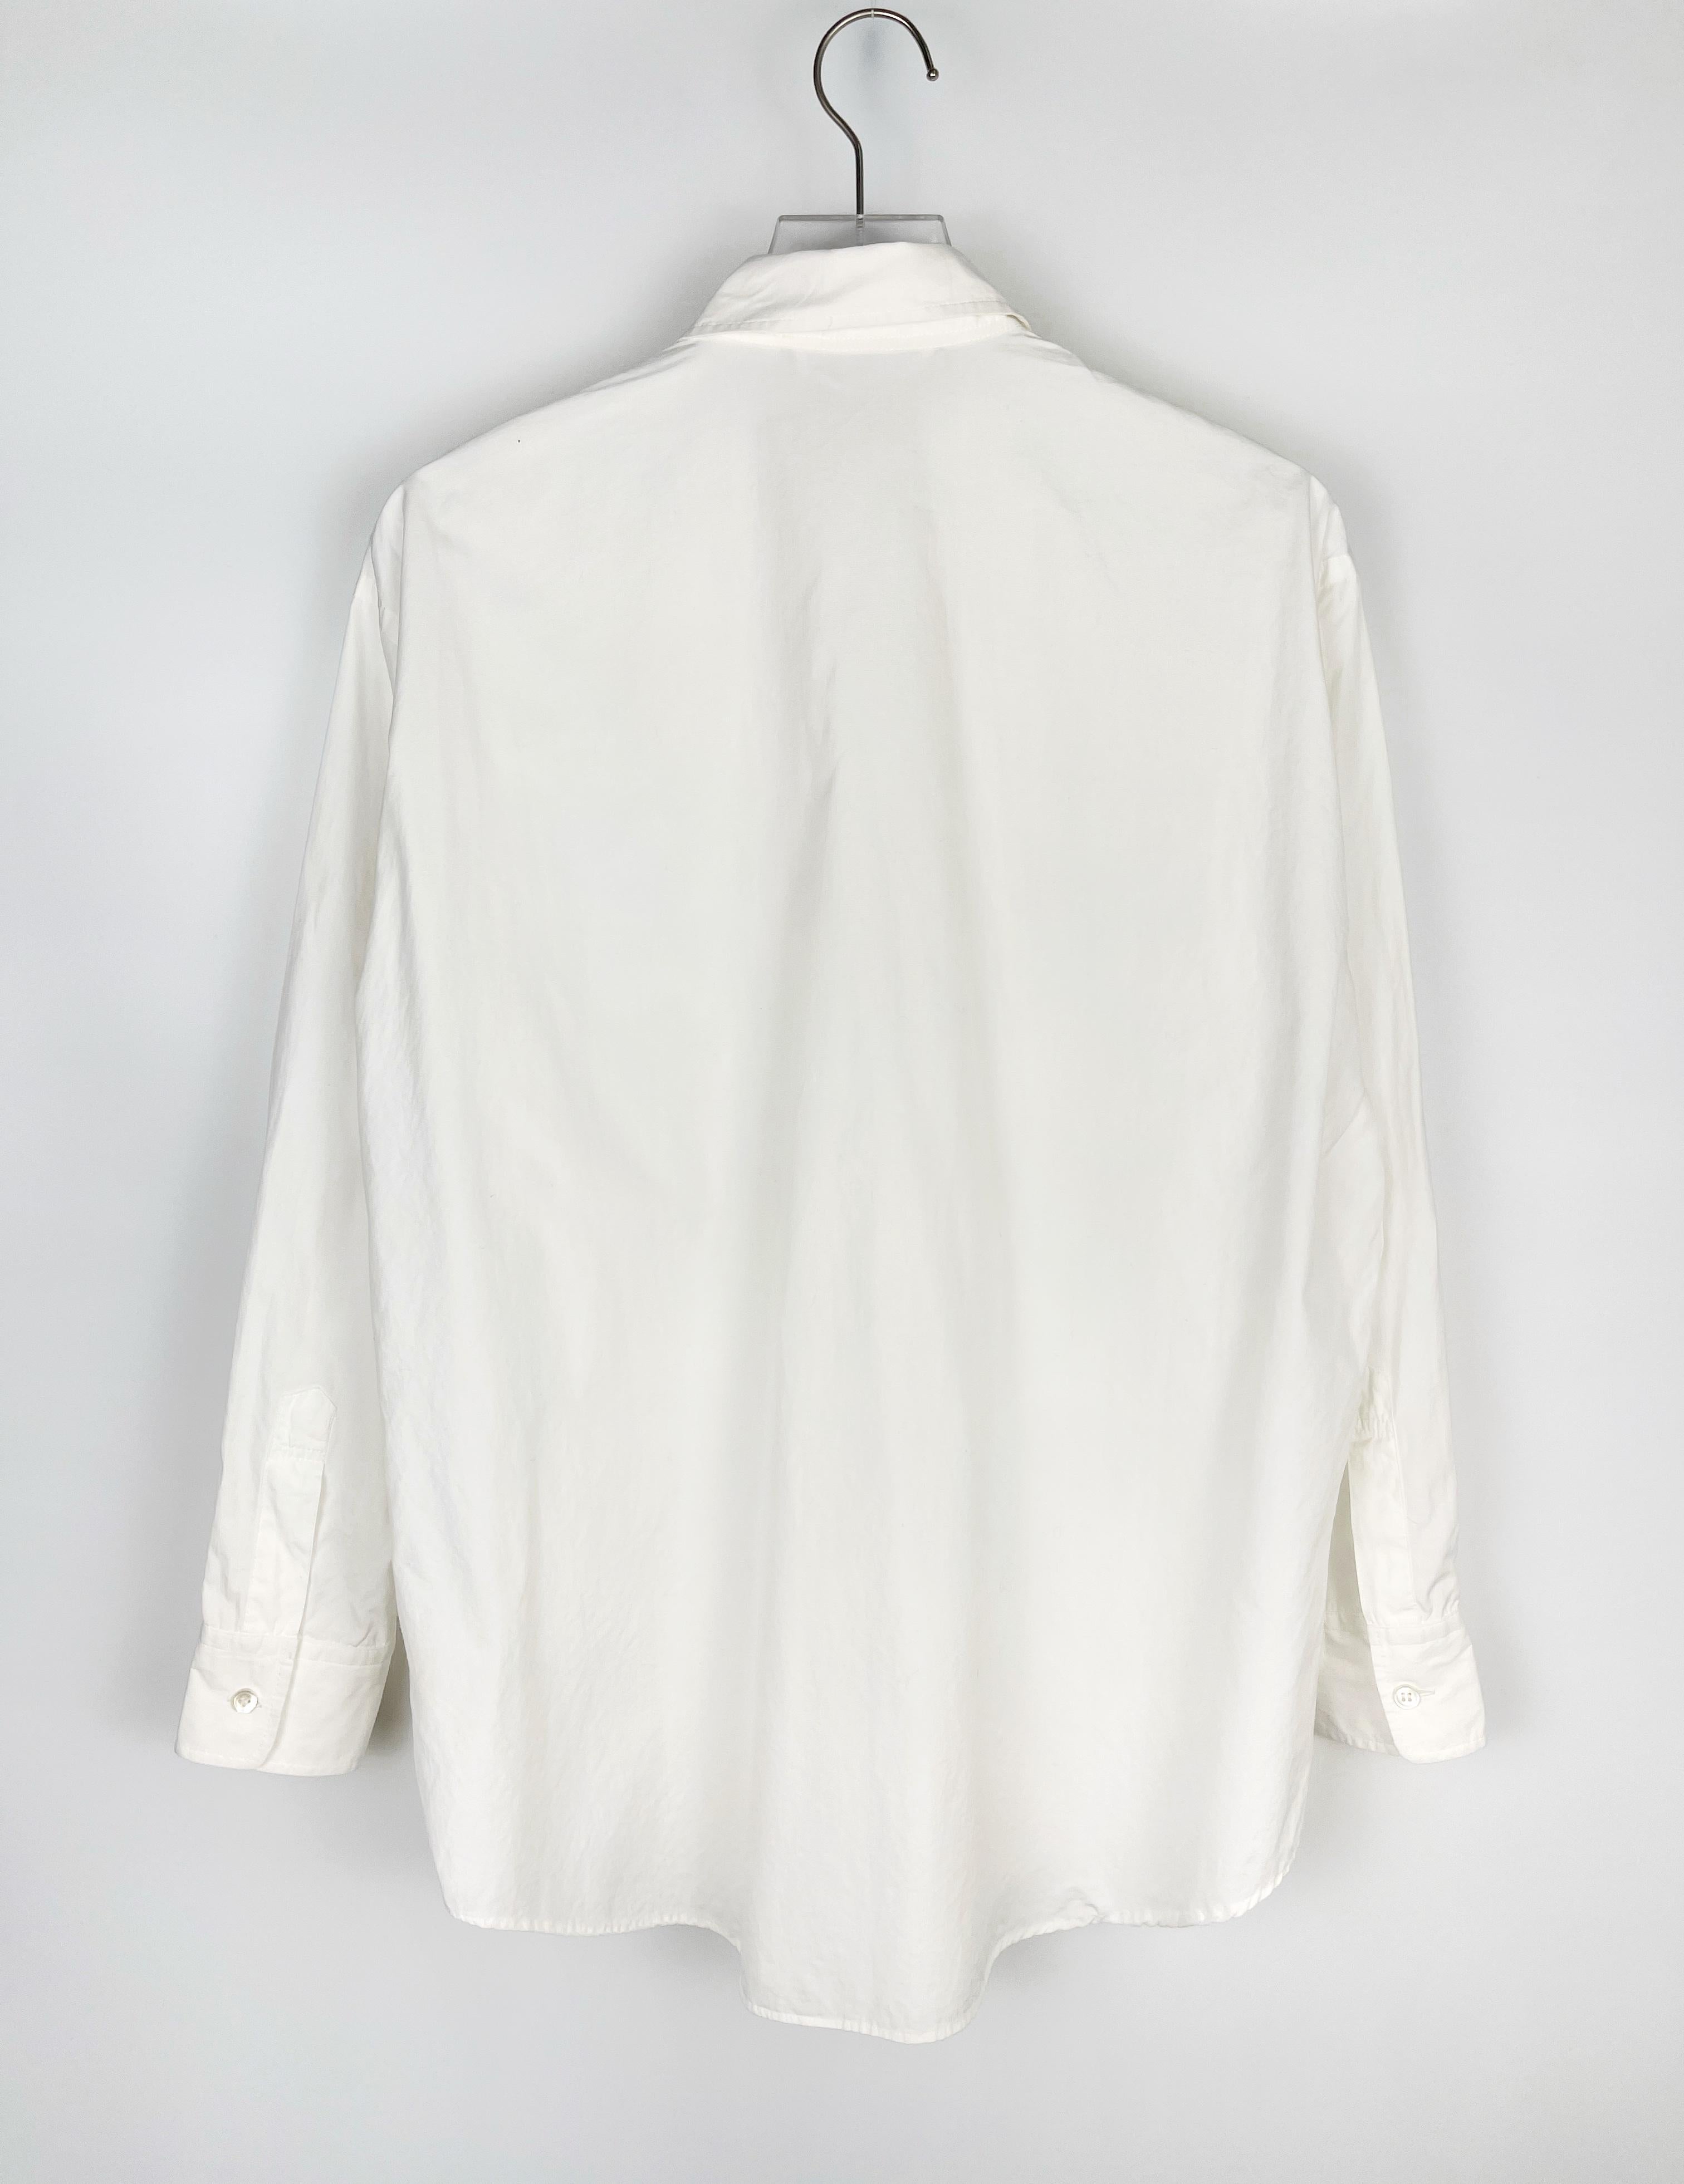 Women's or Men's Comme des Garcons 1970's Fringed Shirt For Sale